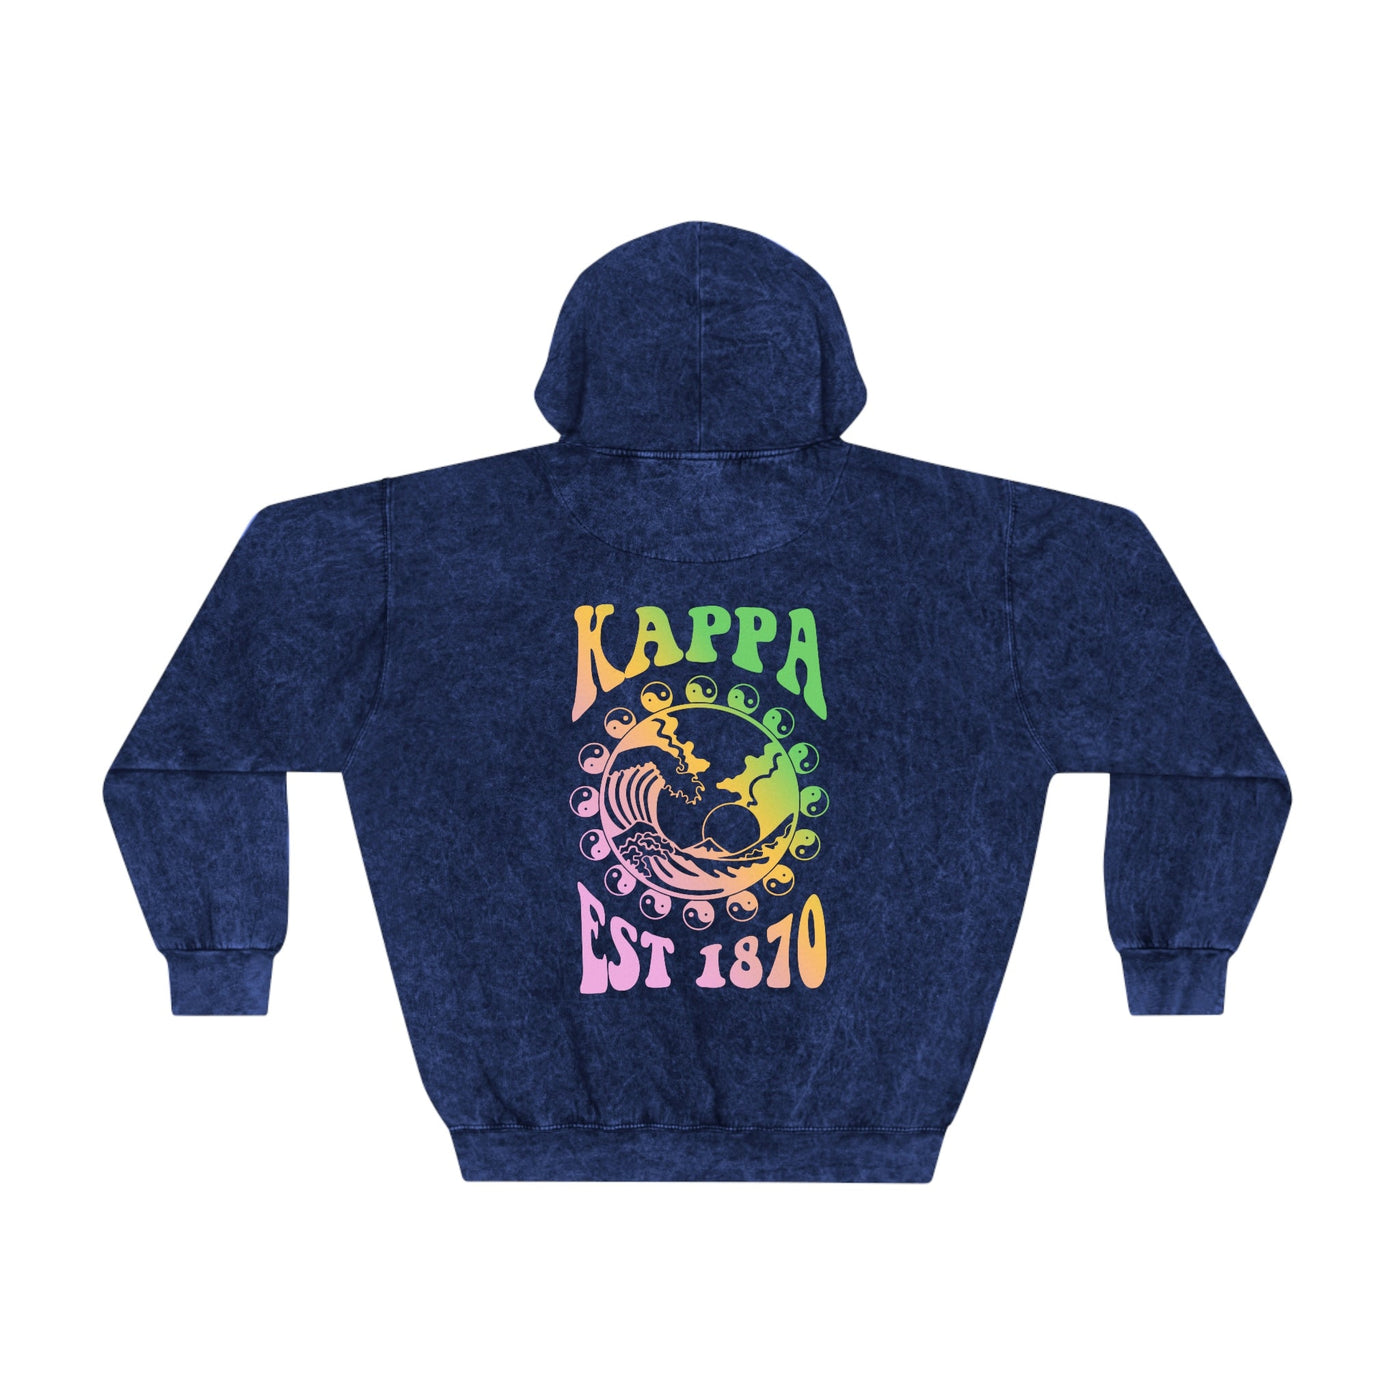 Kappa Kappa Gamma Yin-Yang Surf Sorority Hoodie Mineral Wash Tie Dye